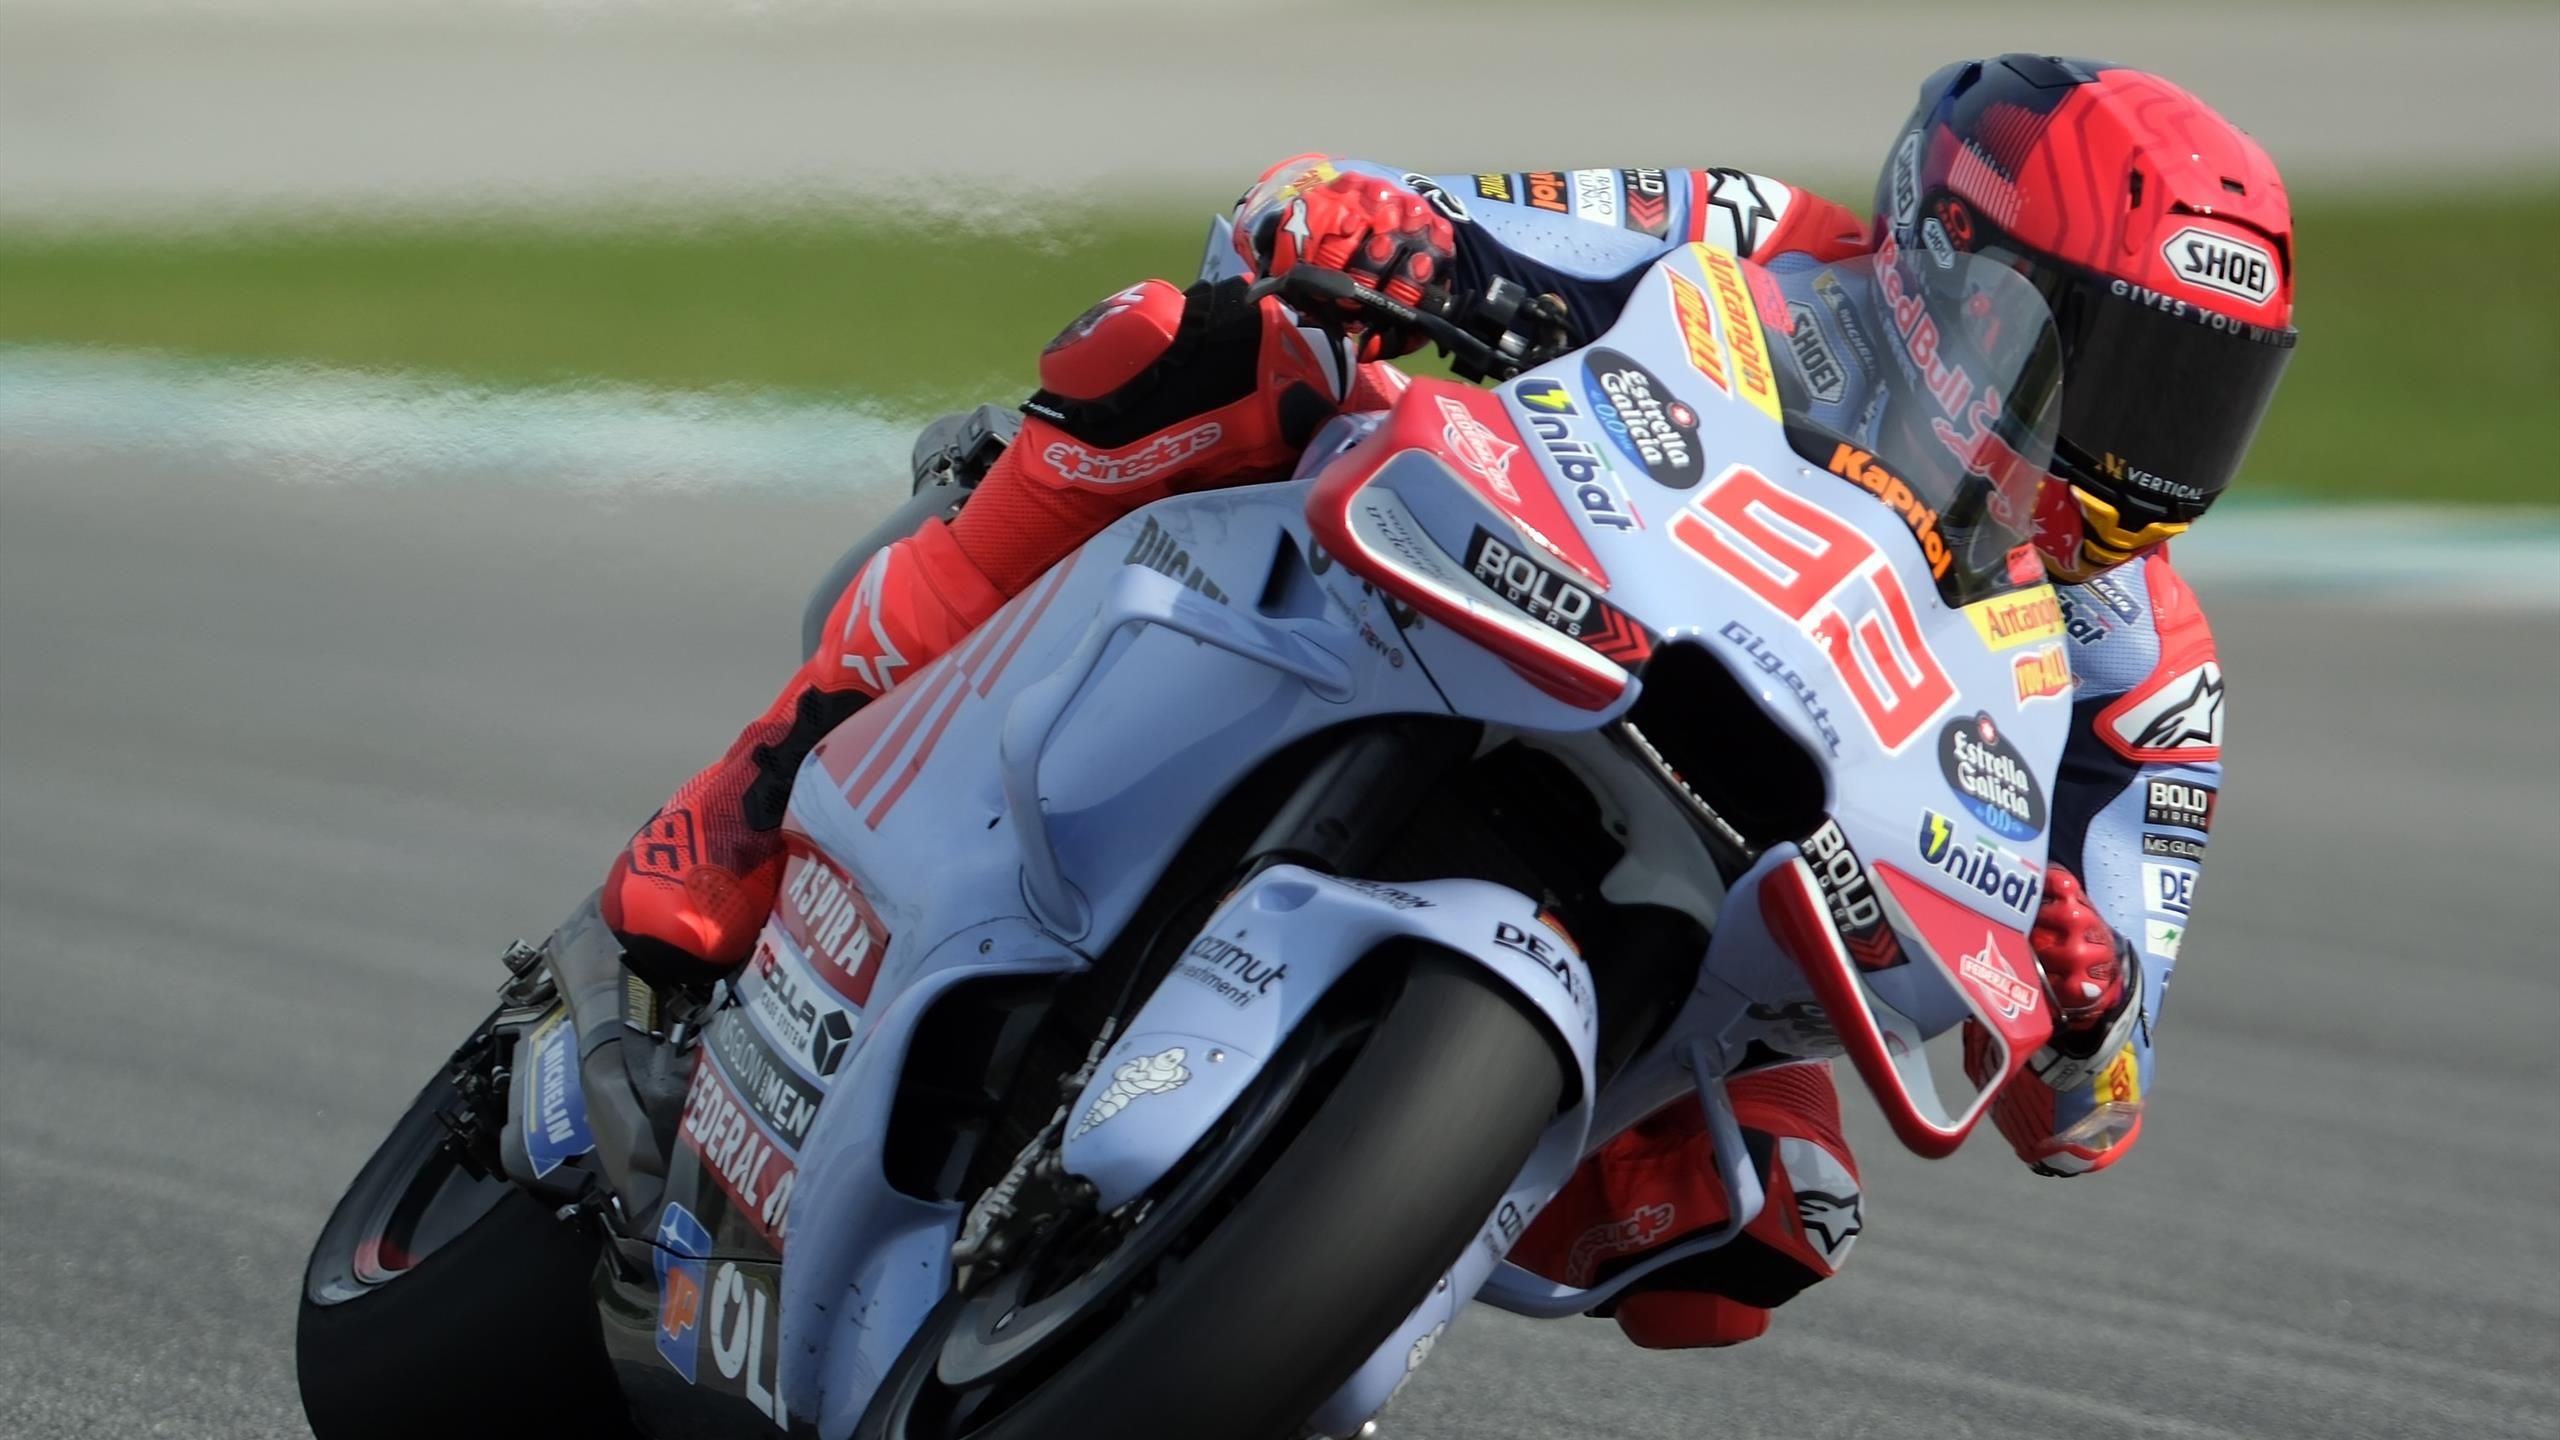 Marquez Reflects on Jerez MotoGP Podium as a New Beginning